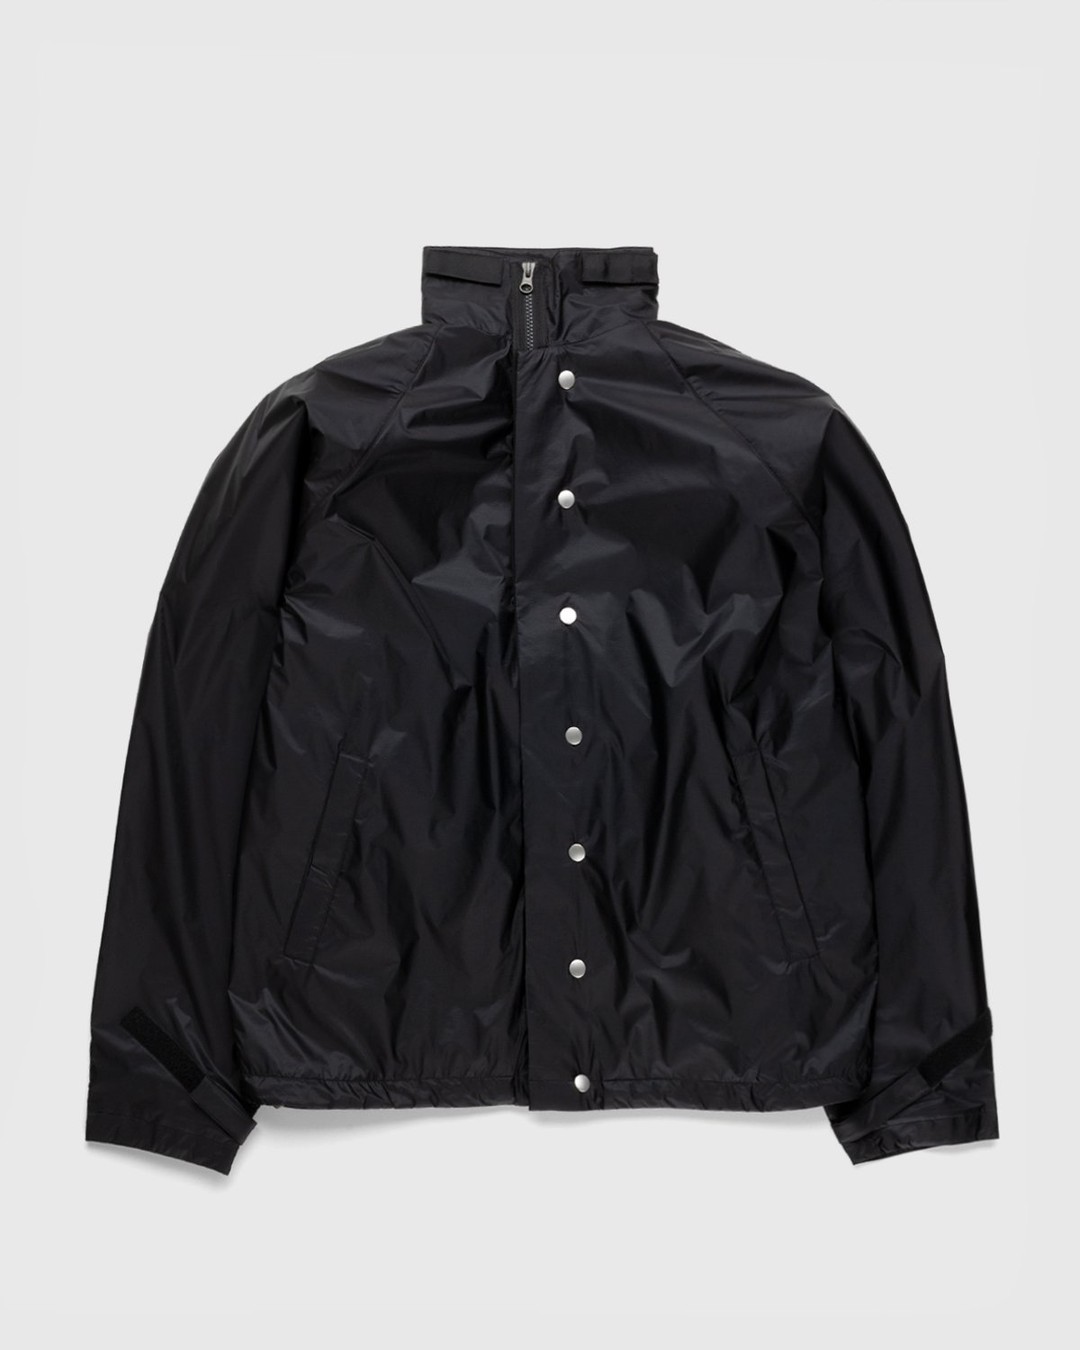 ACRONYM – J95-WS Jacket Black - Outerwear - Black - Image 1